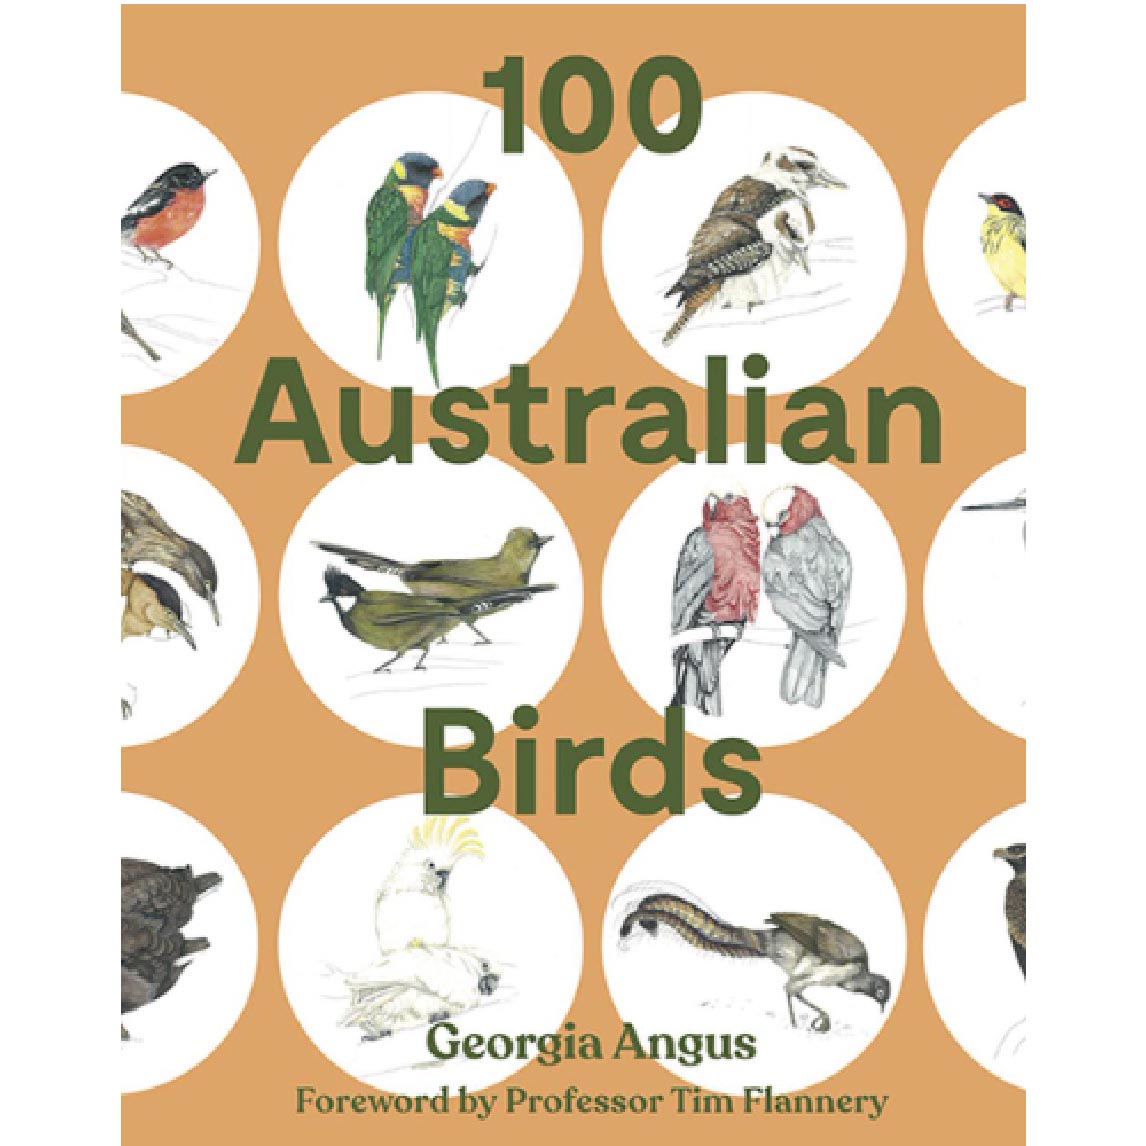 100 Australian Birds by Georgia Angus